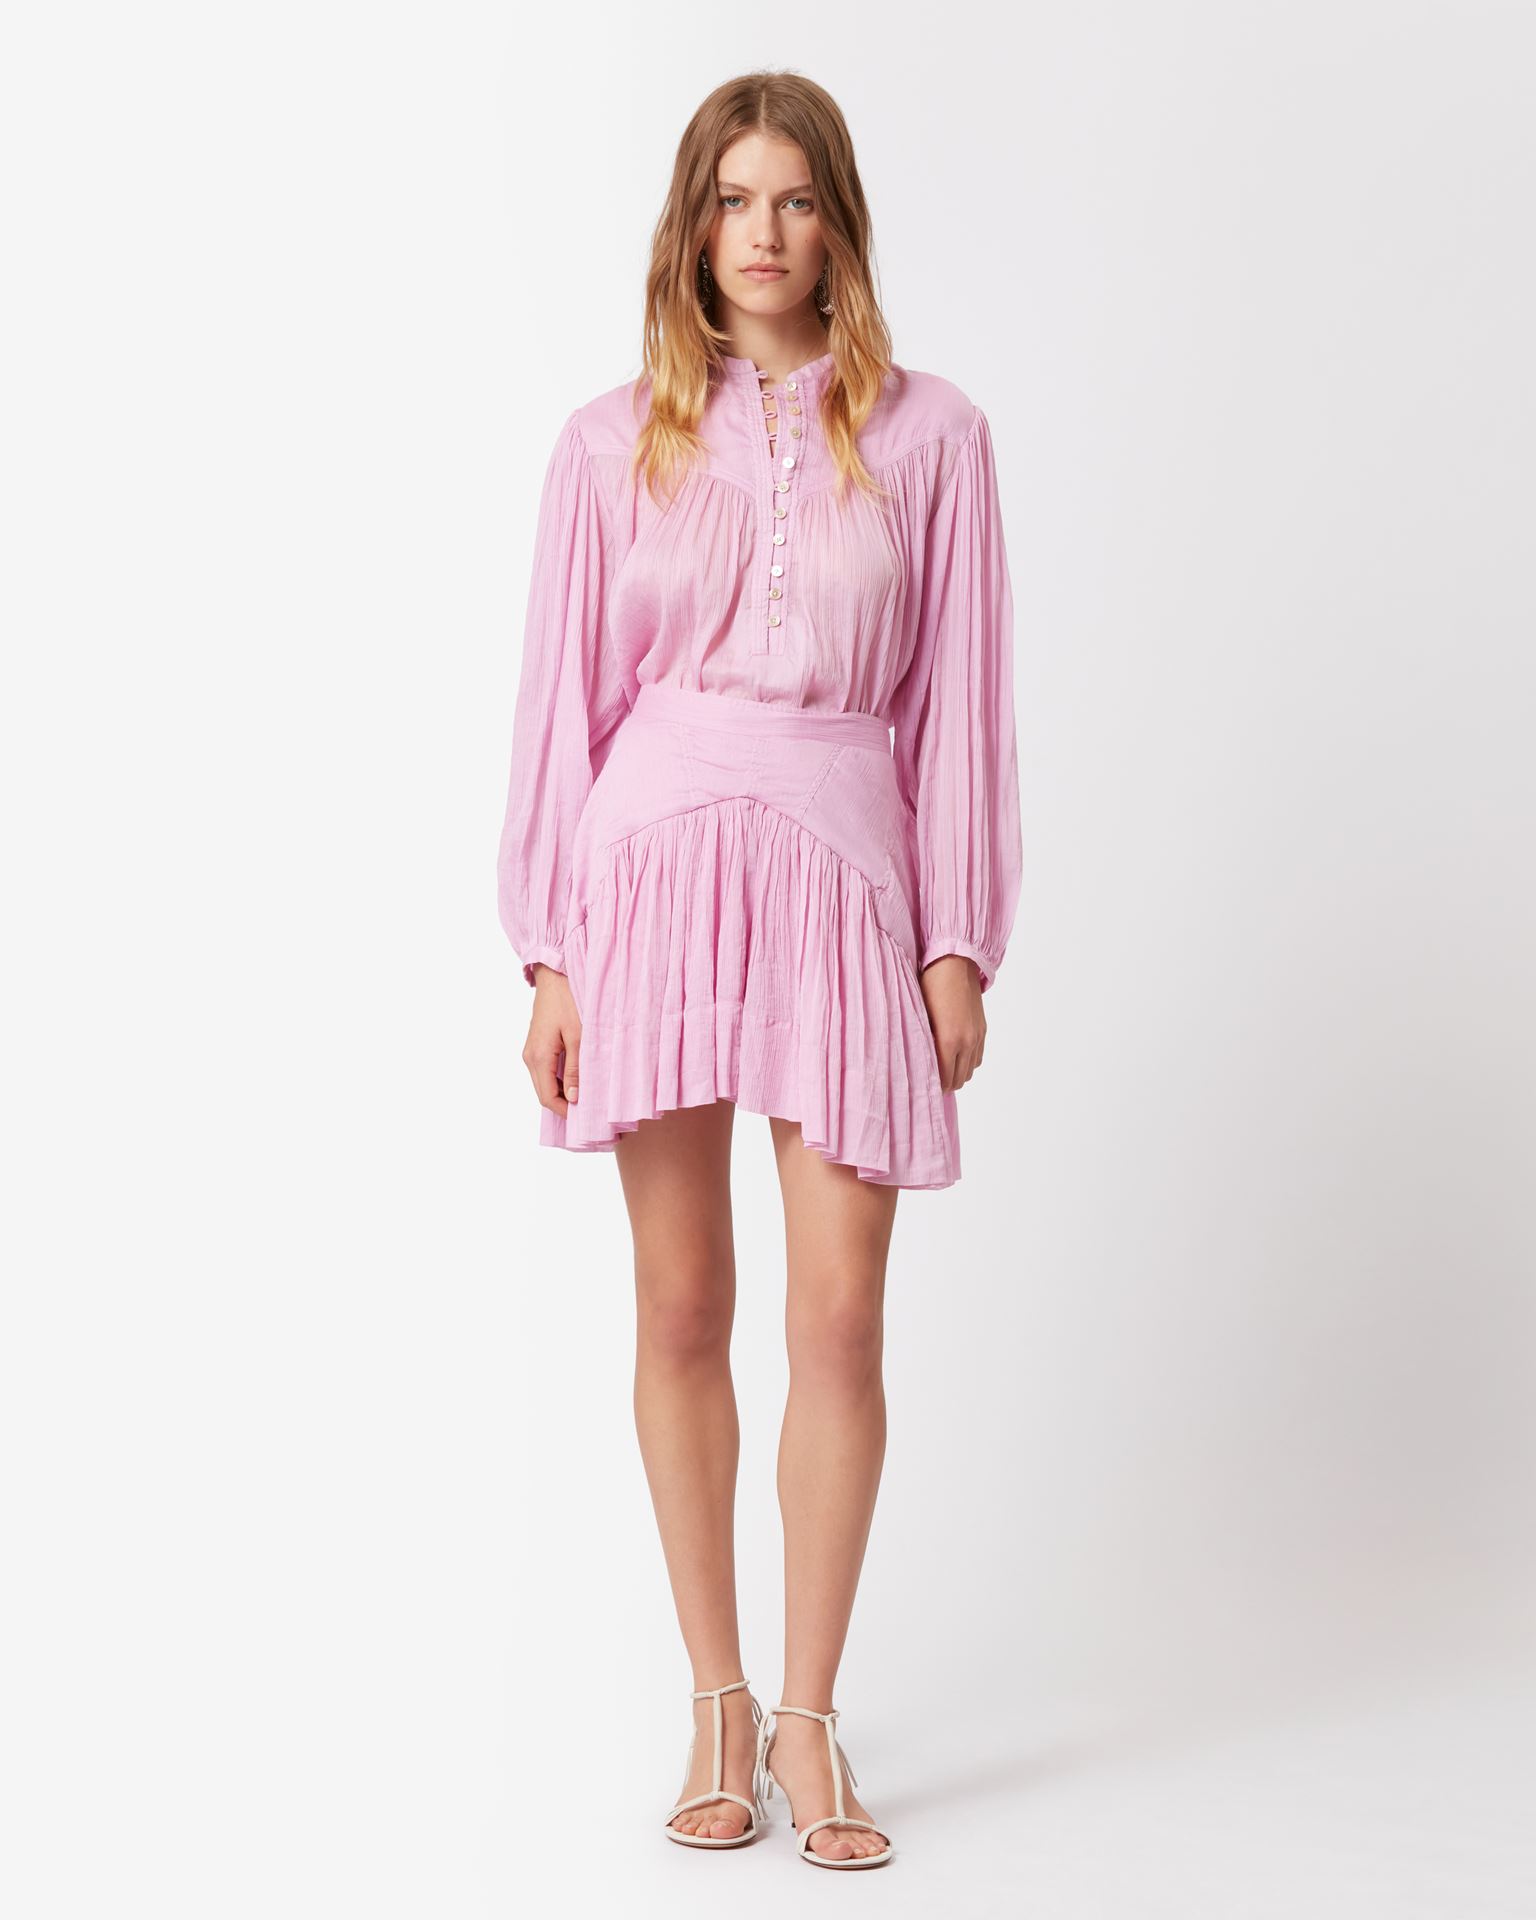 Isabel Marant, Kadavu Cotton Skirt - Women - Pink